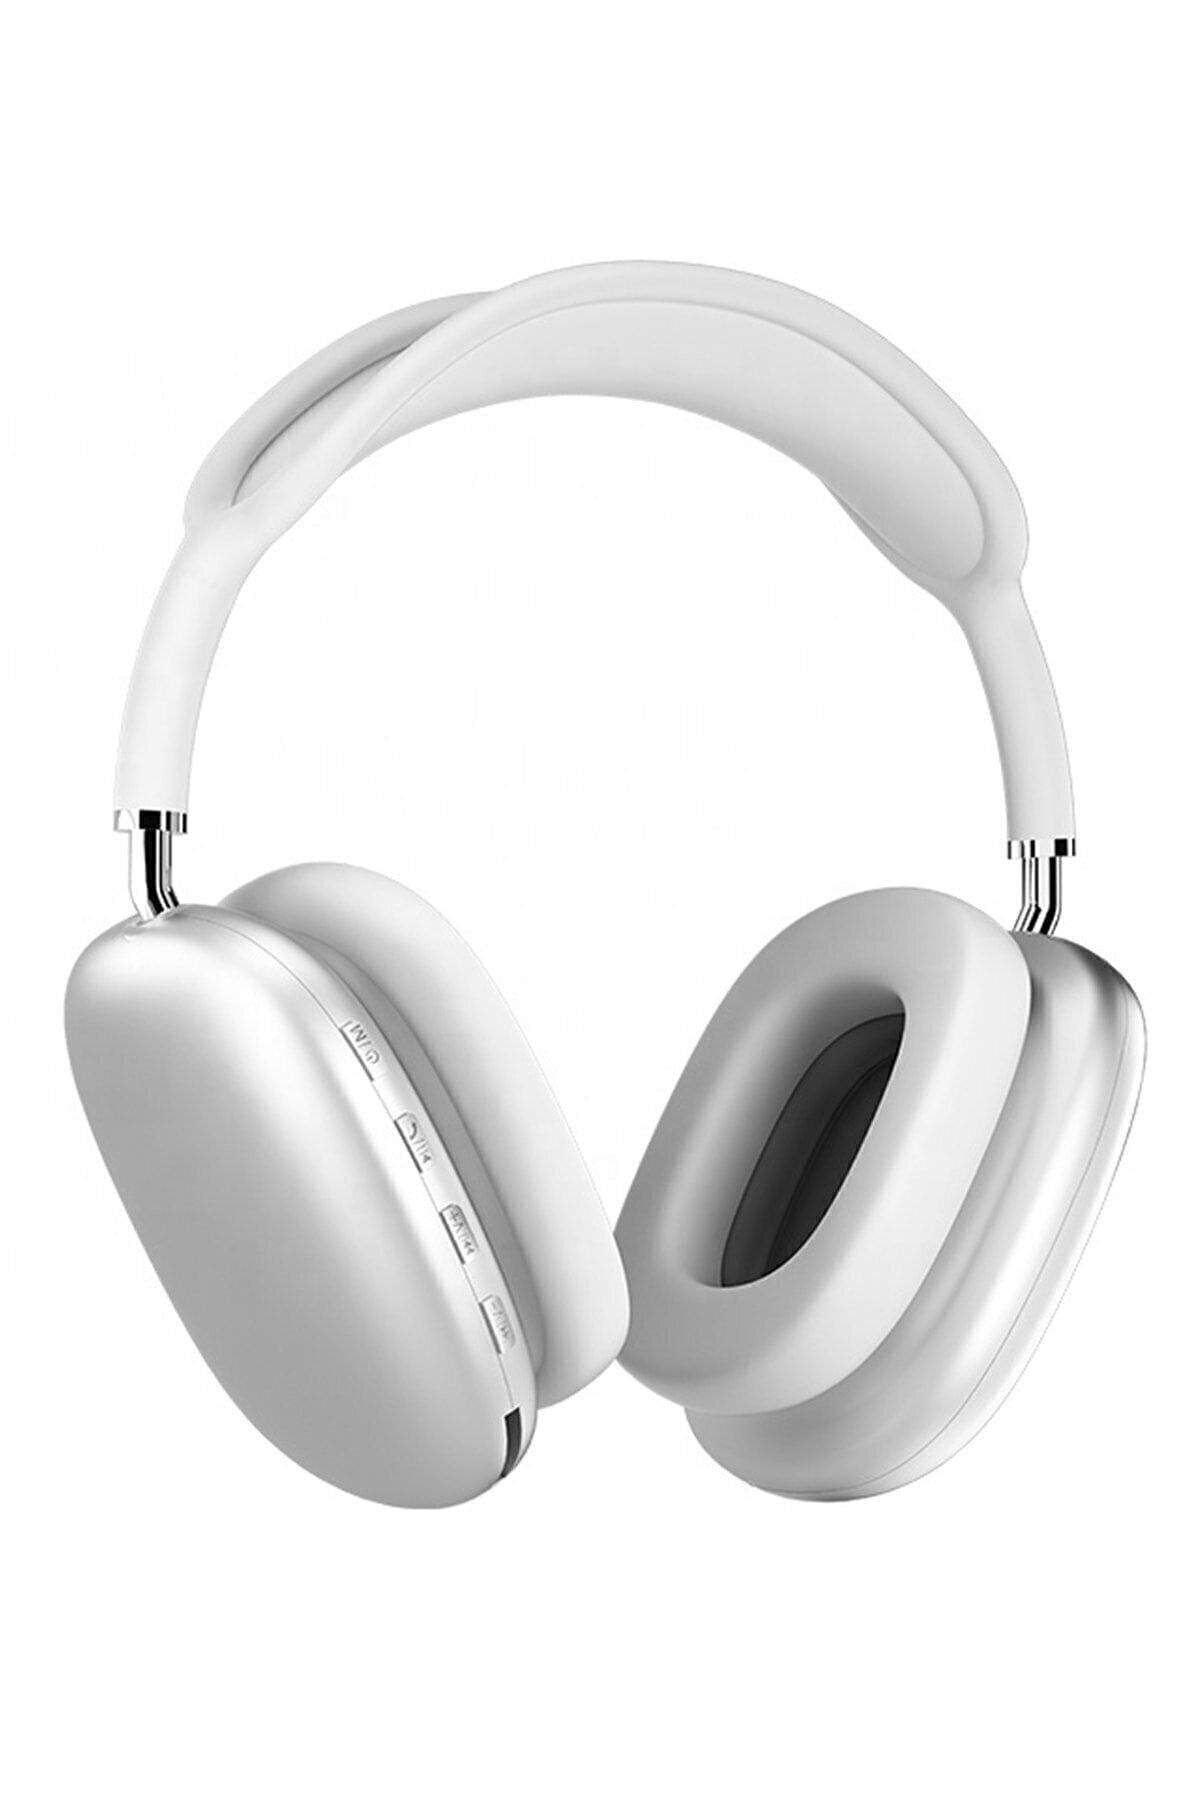 HOBİPİX P9 Plus Gümüş Kulak Üstü Bluetooth Kulaklık